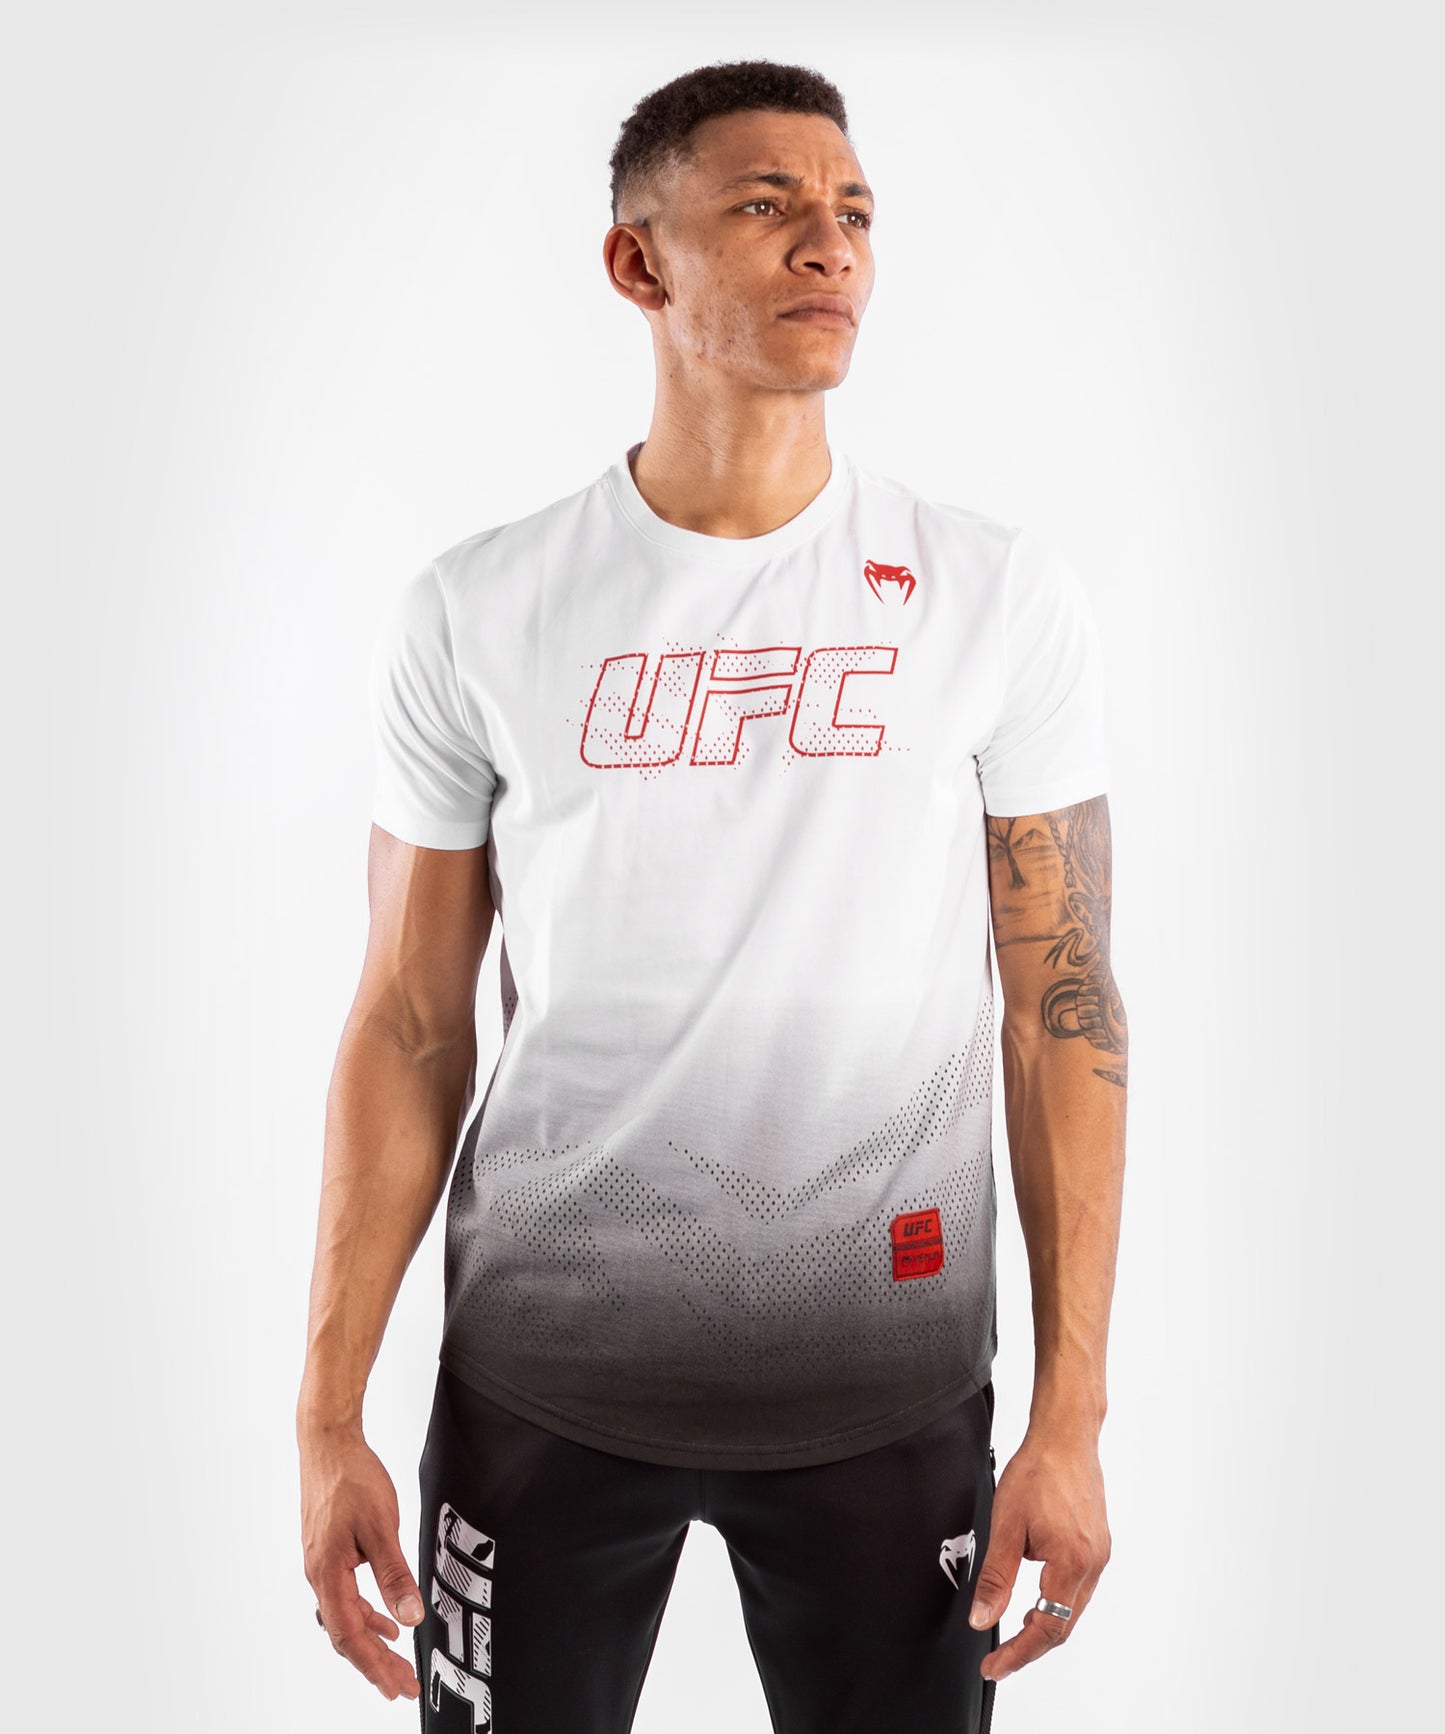 UFC Venum Authentic Fight Week Men's Short Sleeve T-Shirt - MMA Factory